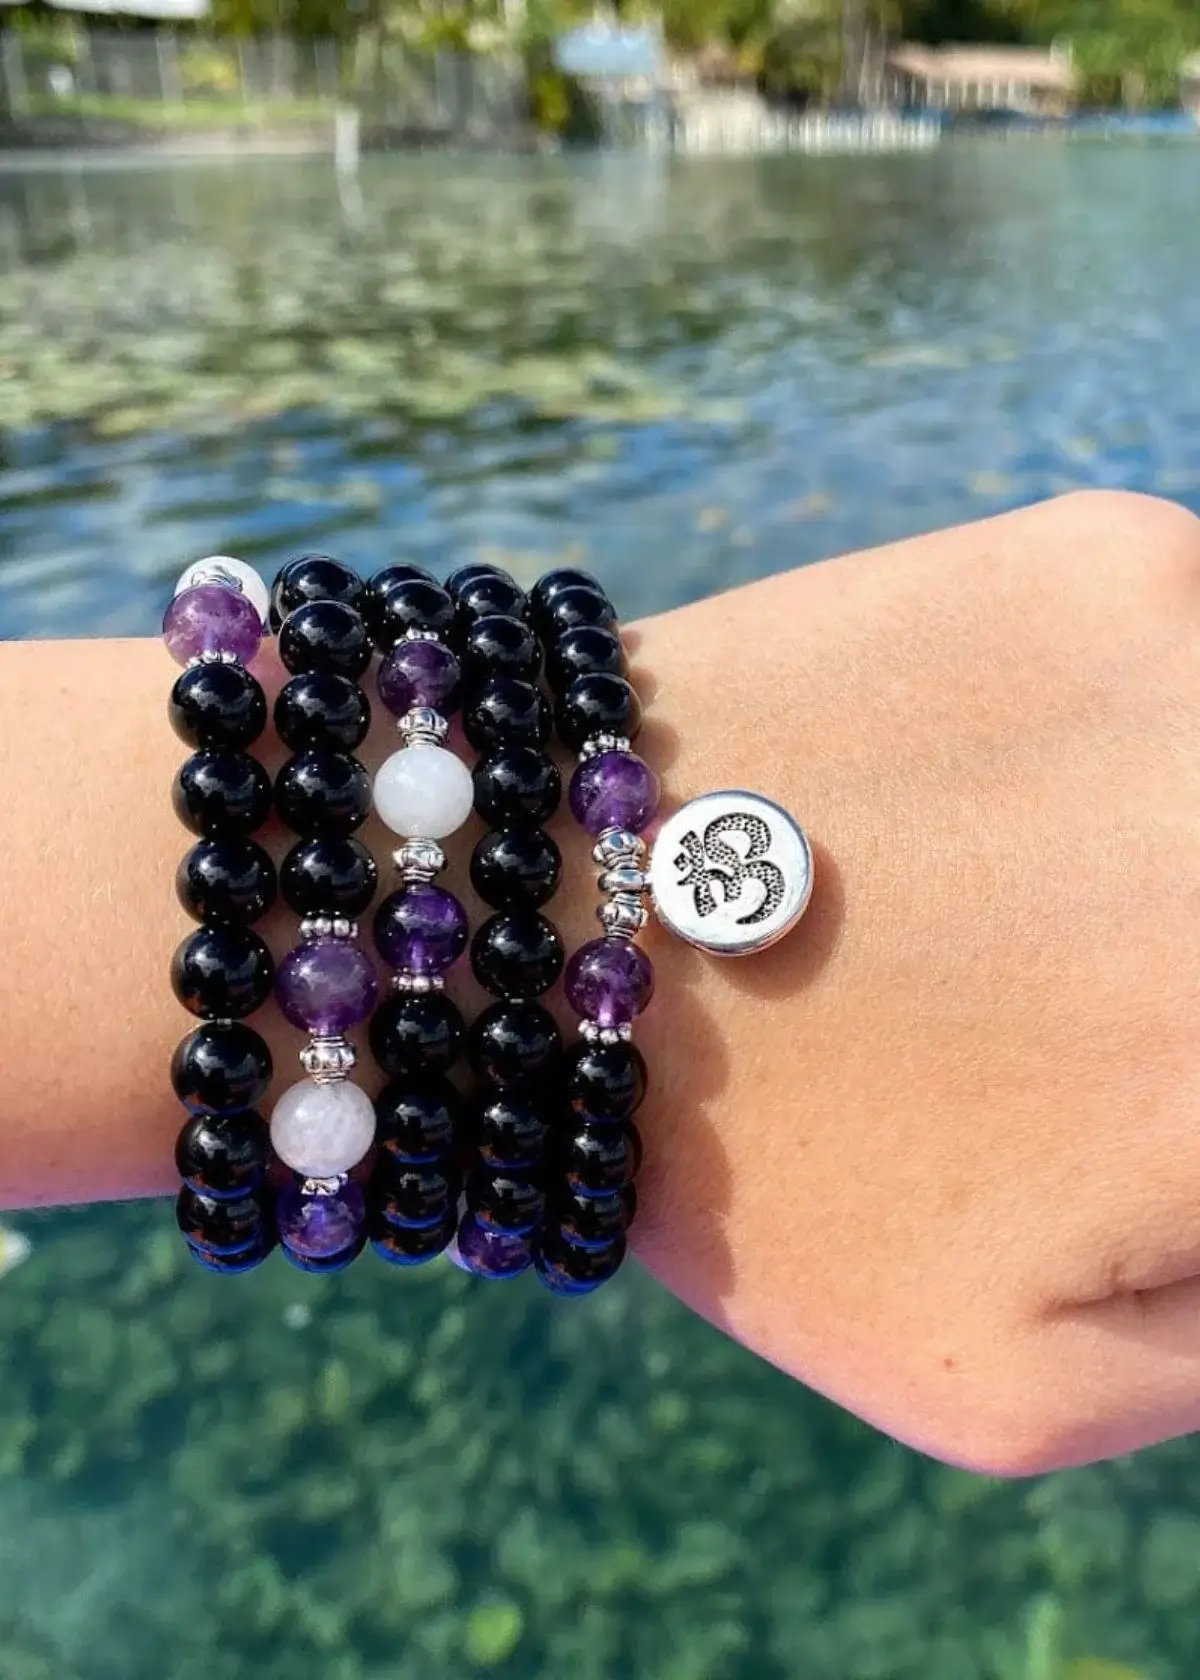 How do you use a mandala bracelet in meditation?